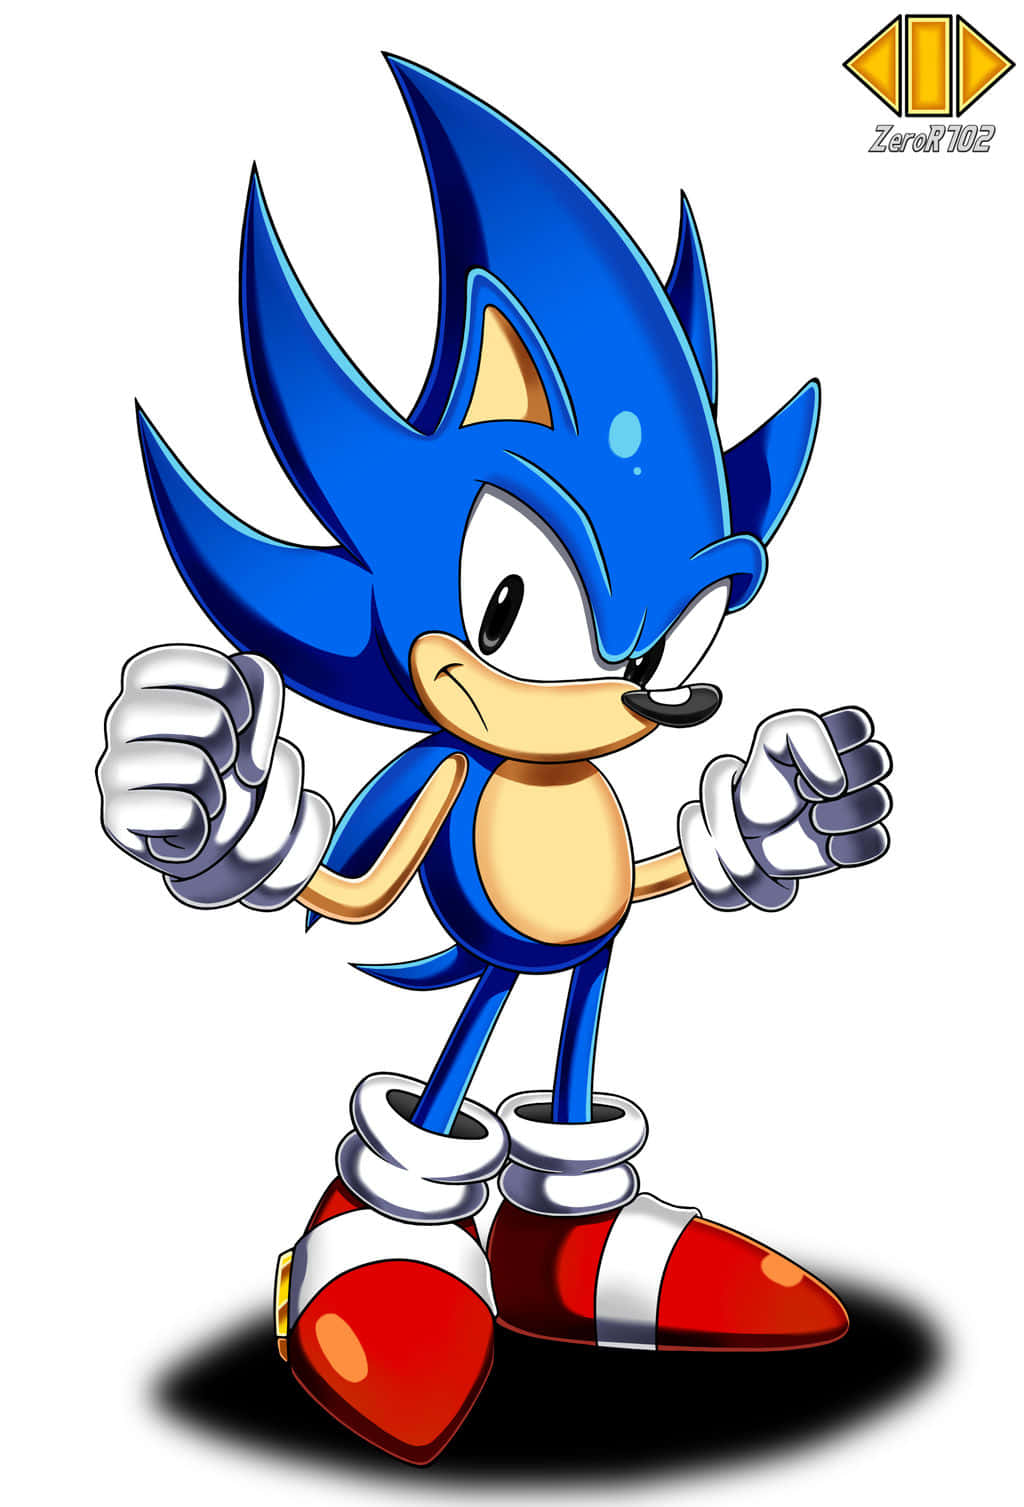 Corriovunque Con Sonic!